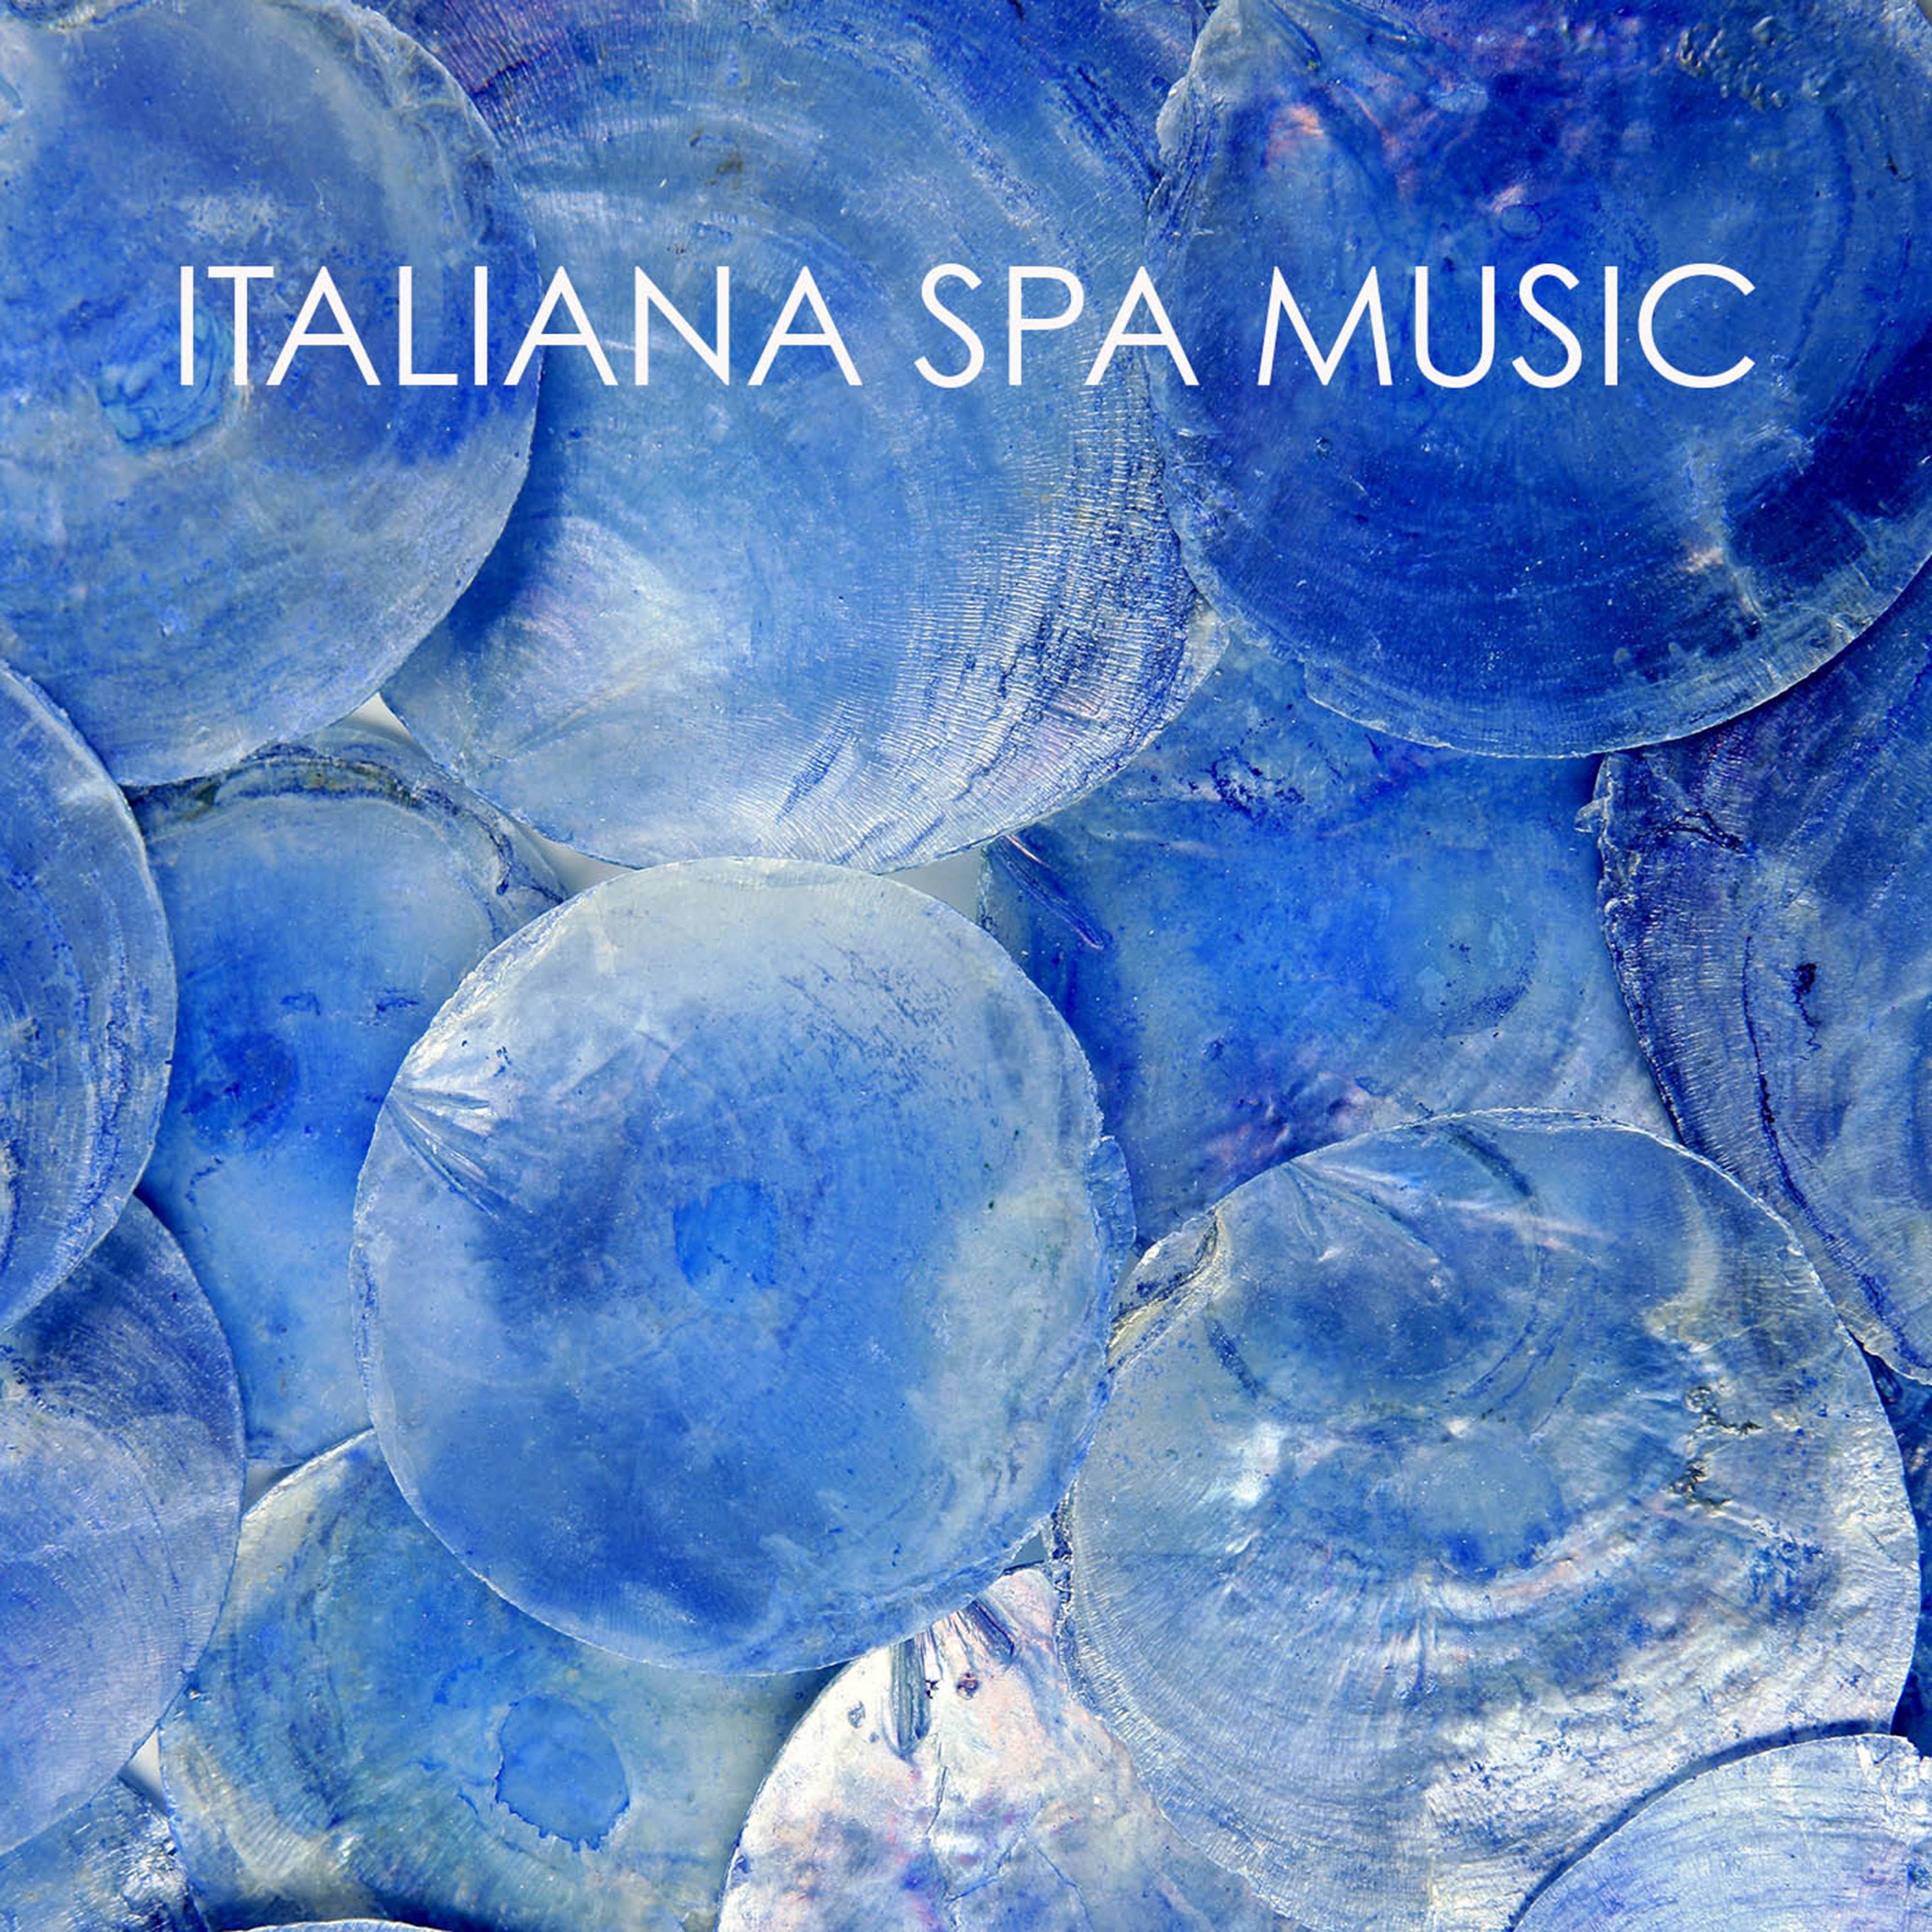 Italiana Spa Music - Piano Music Relaxation, Italian Relaxing Instrumental Spa Music Experience